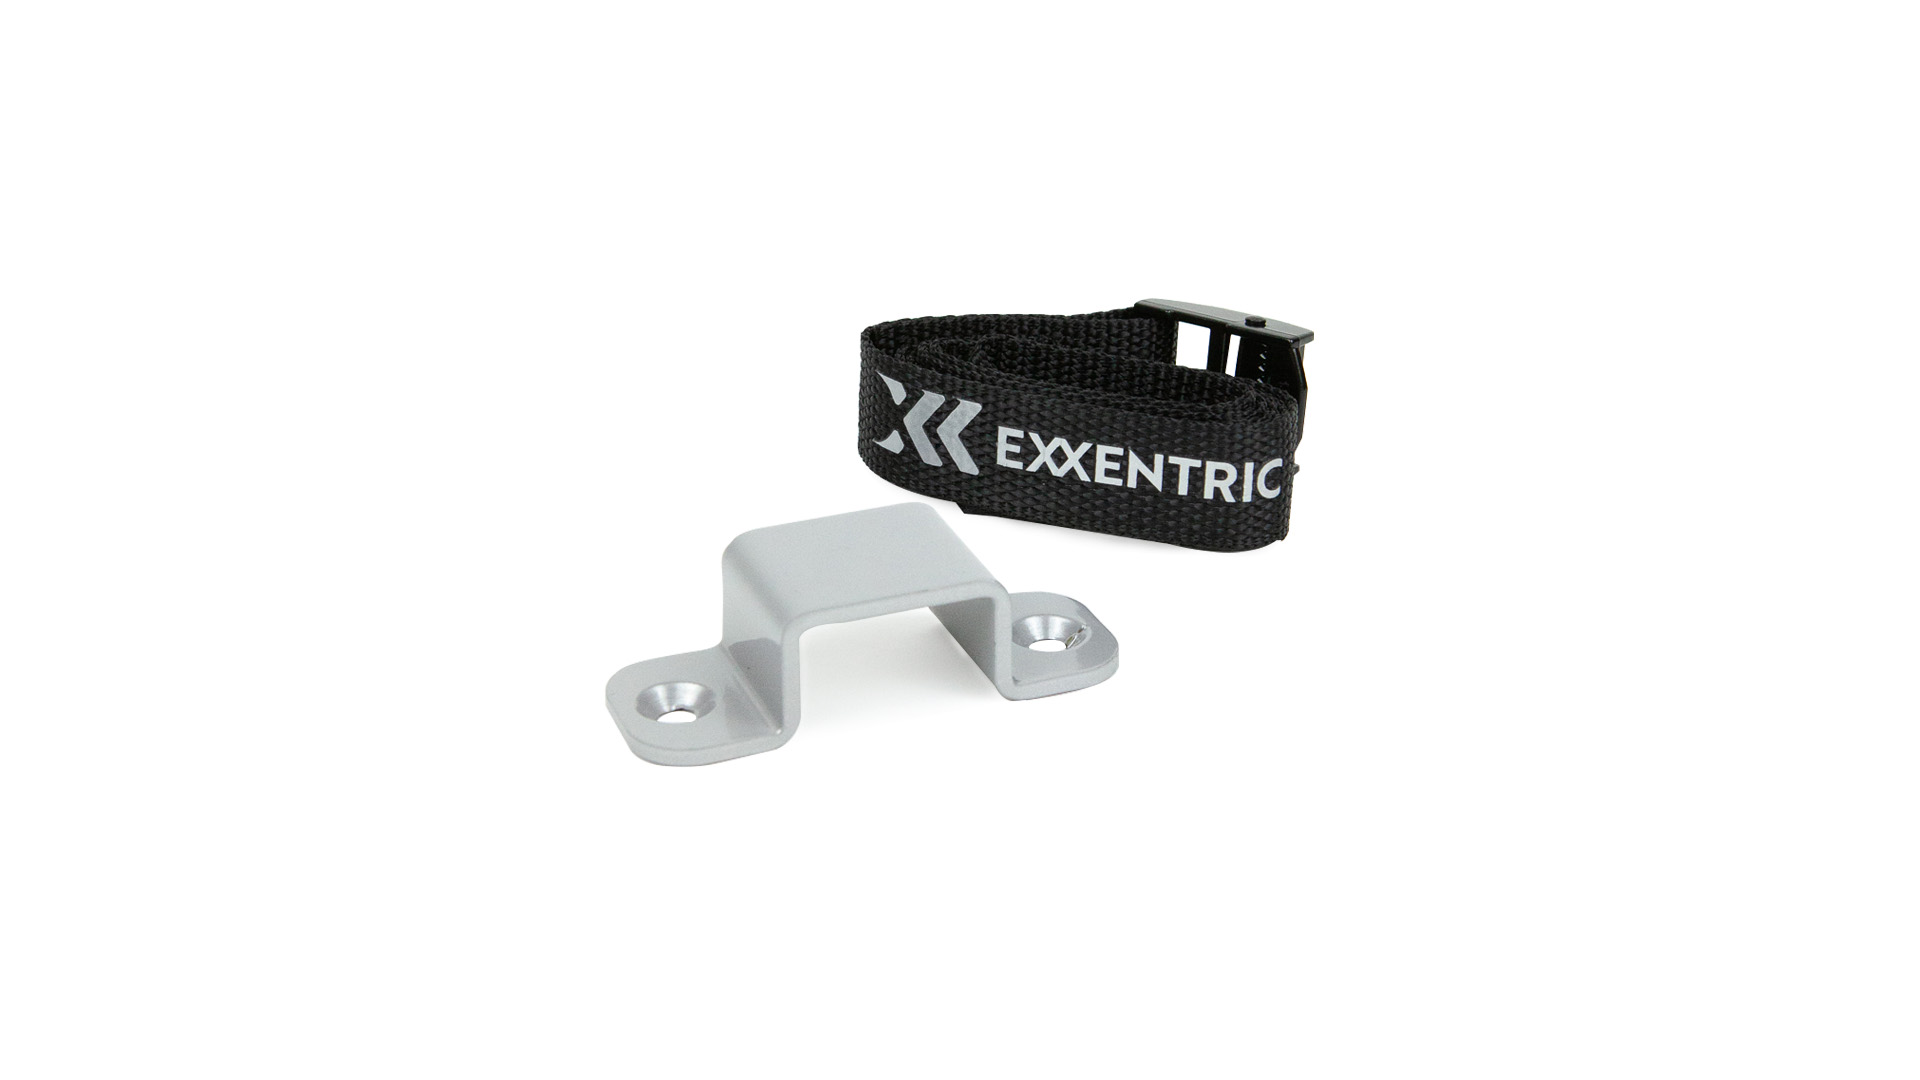 Exxentric kBox Attachment Kit